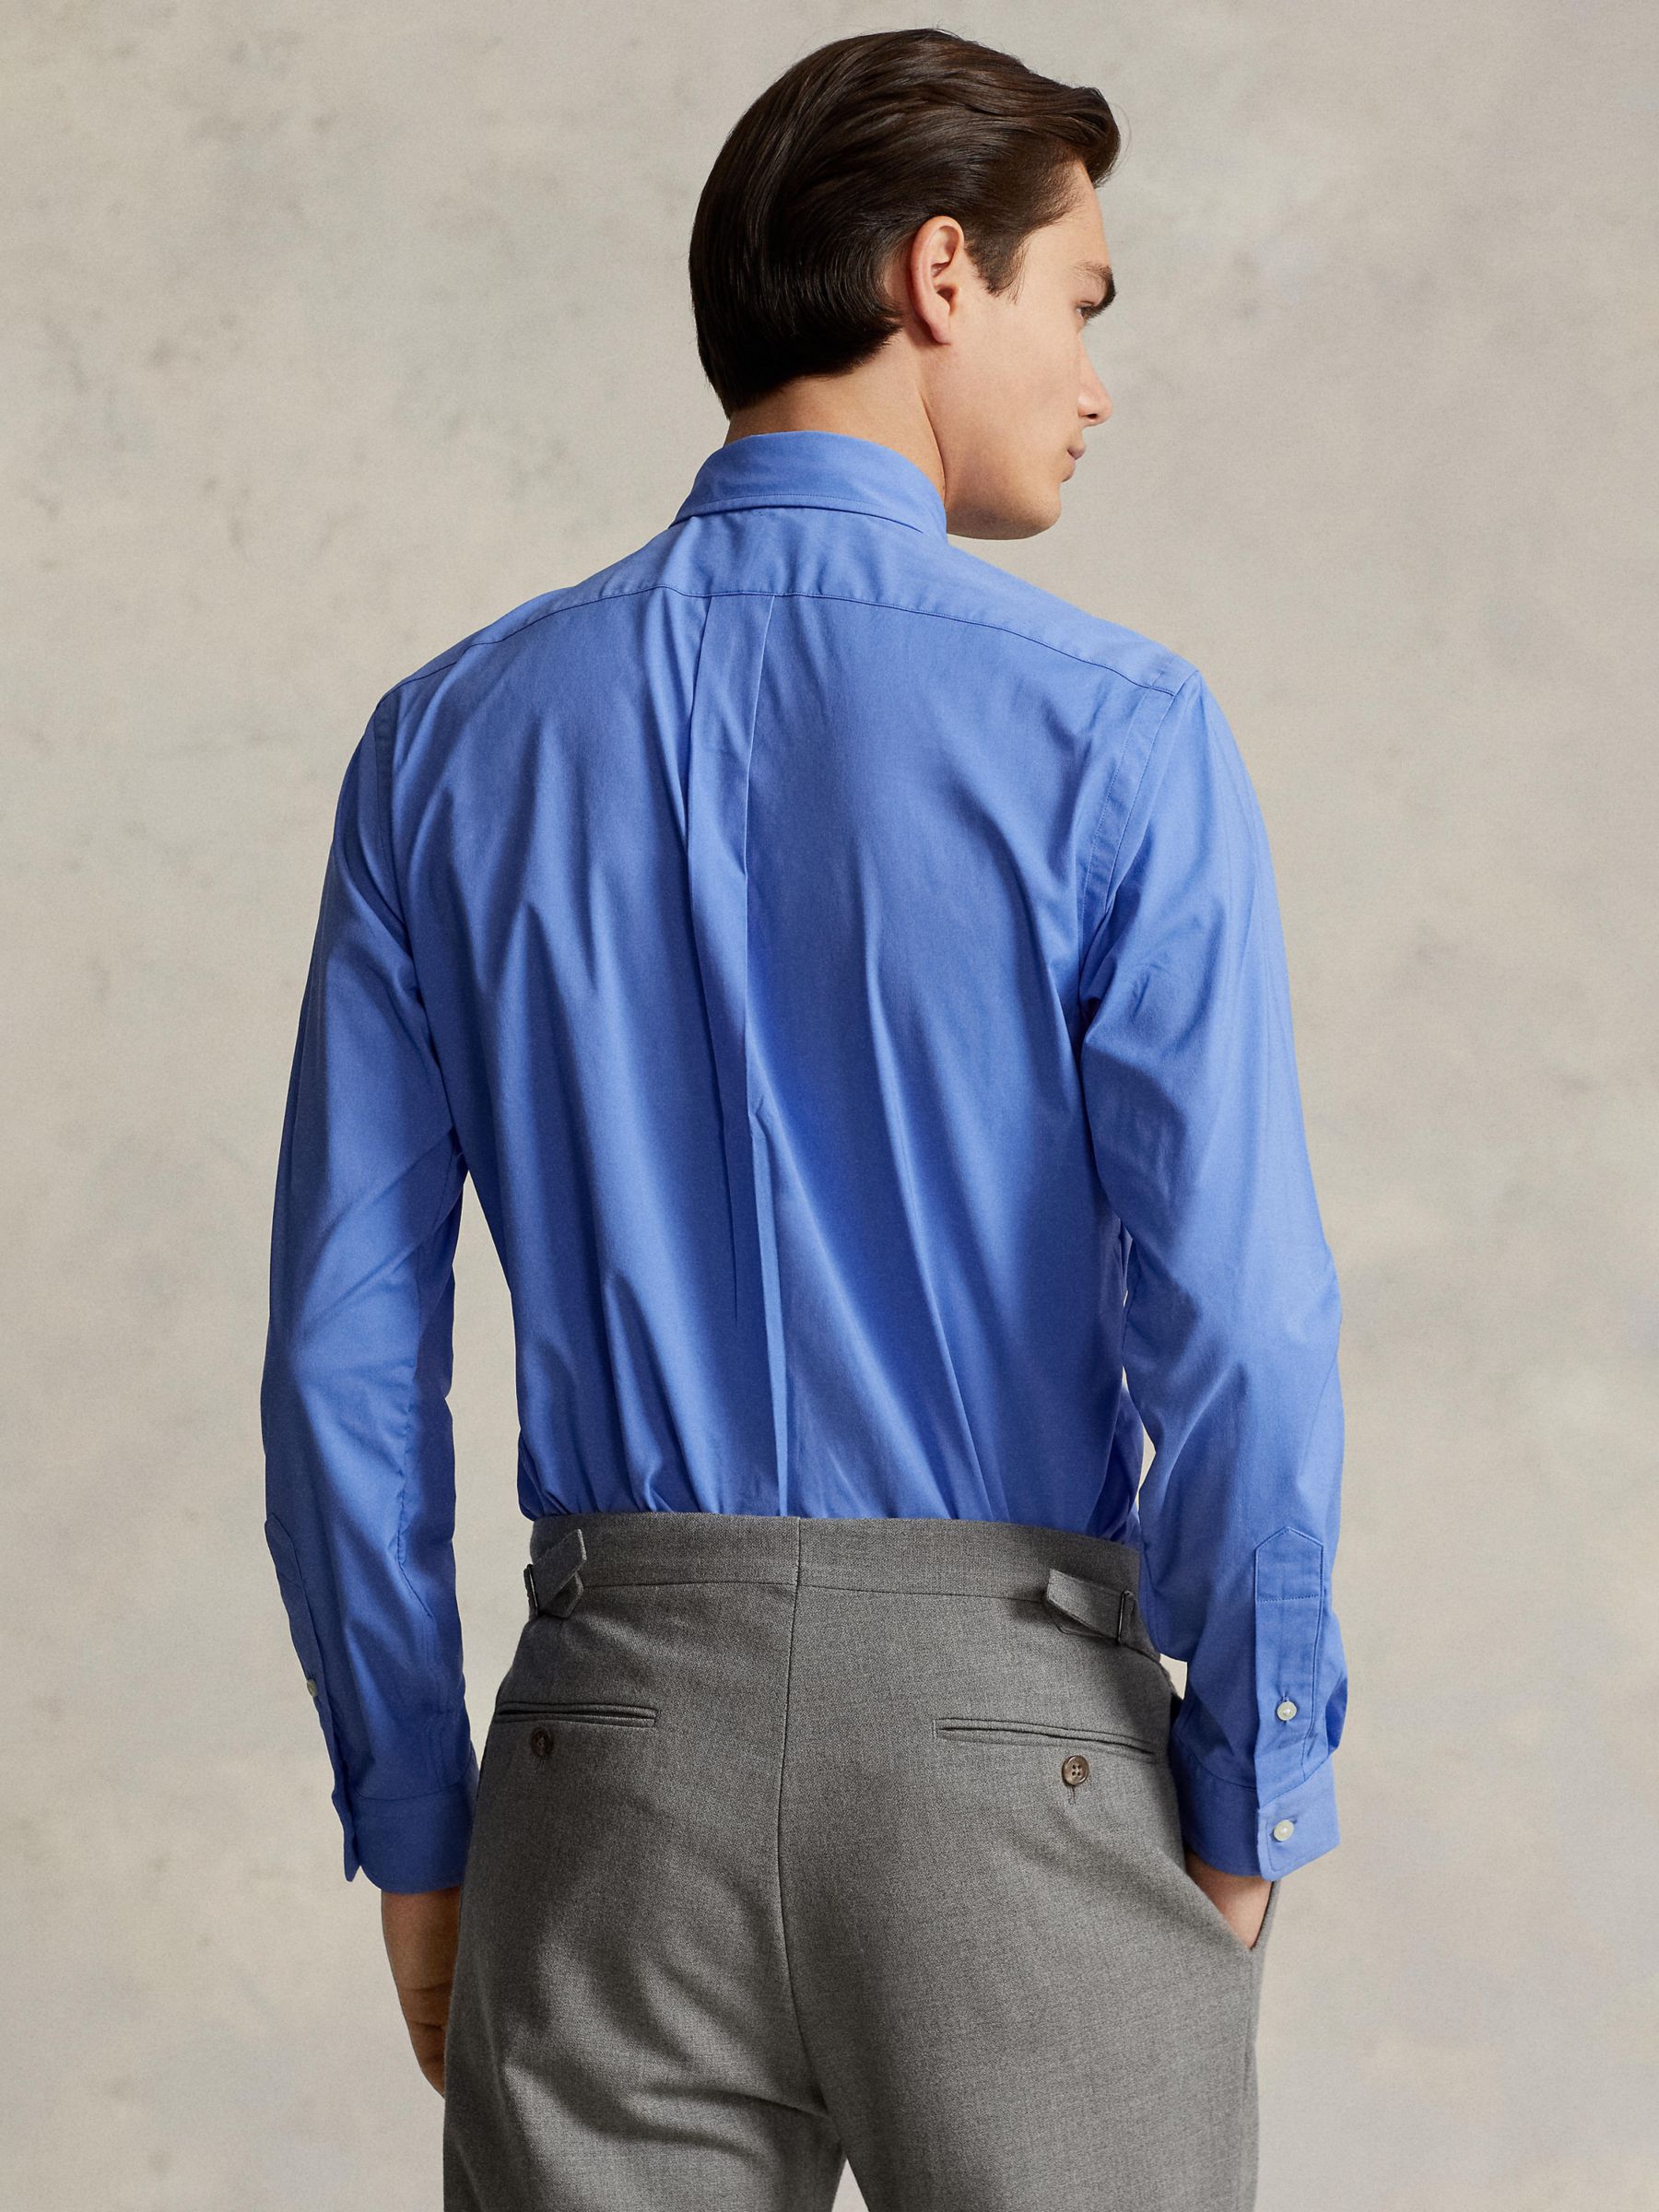 Polo Ralph Lauren Long Sleeve Classic Fit Performance Twill Shirt, Harbor  Island Blue at John Lewis & Partners